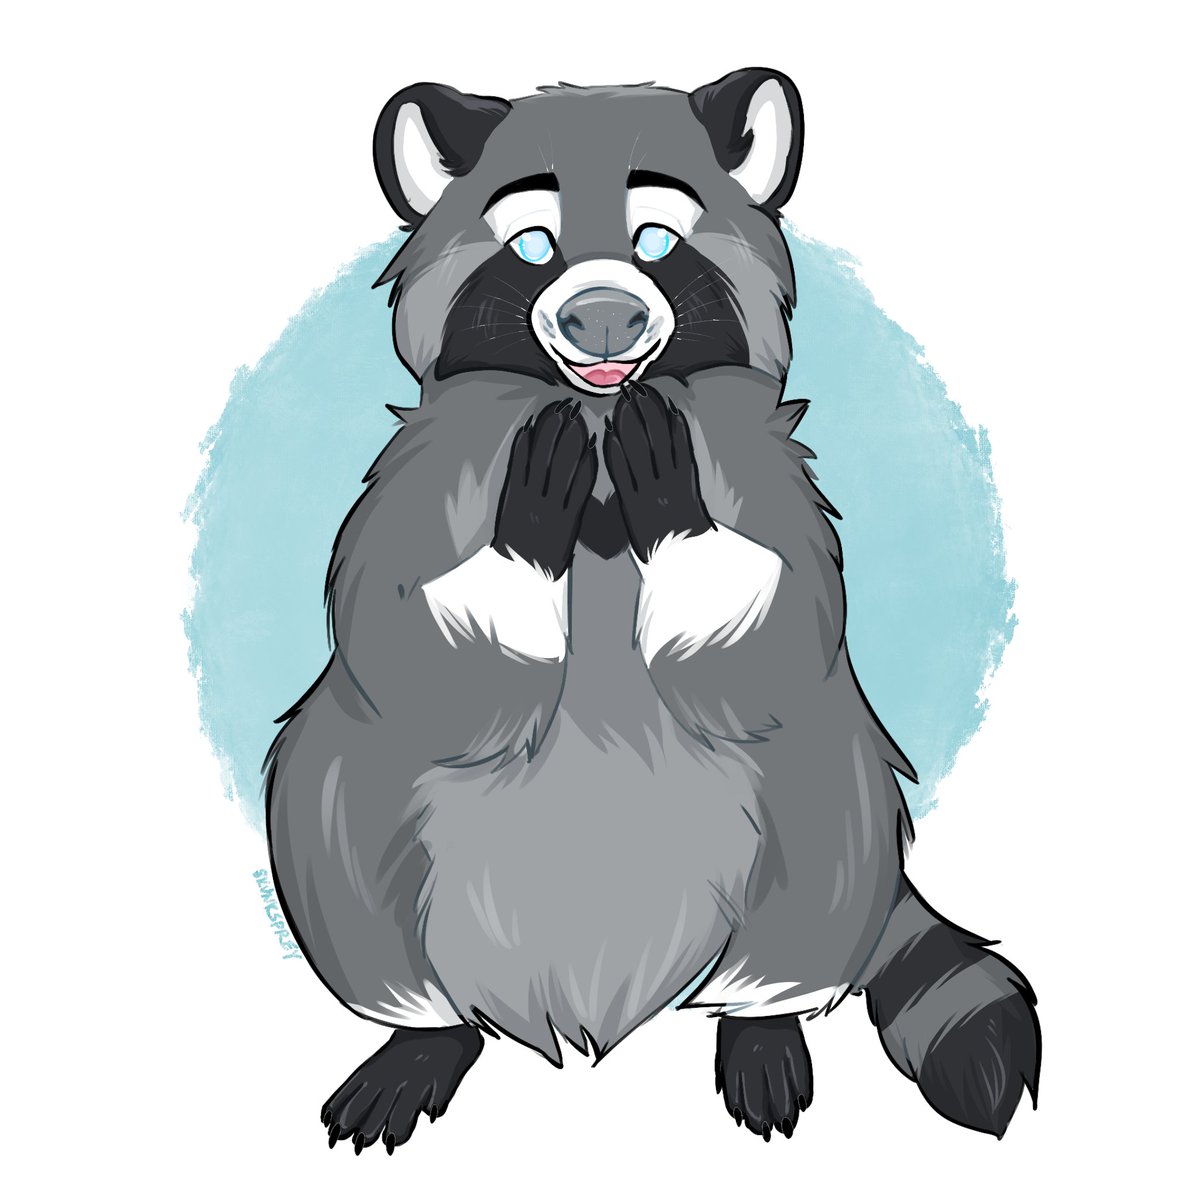 Bringing back my blind raccoon character, Andy, I made in 2016 🩶🦝

#furryart #raccoonart